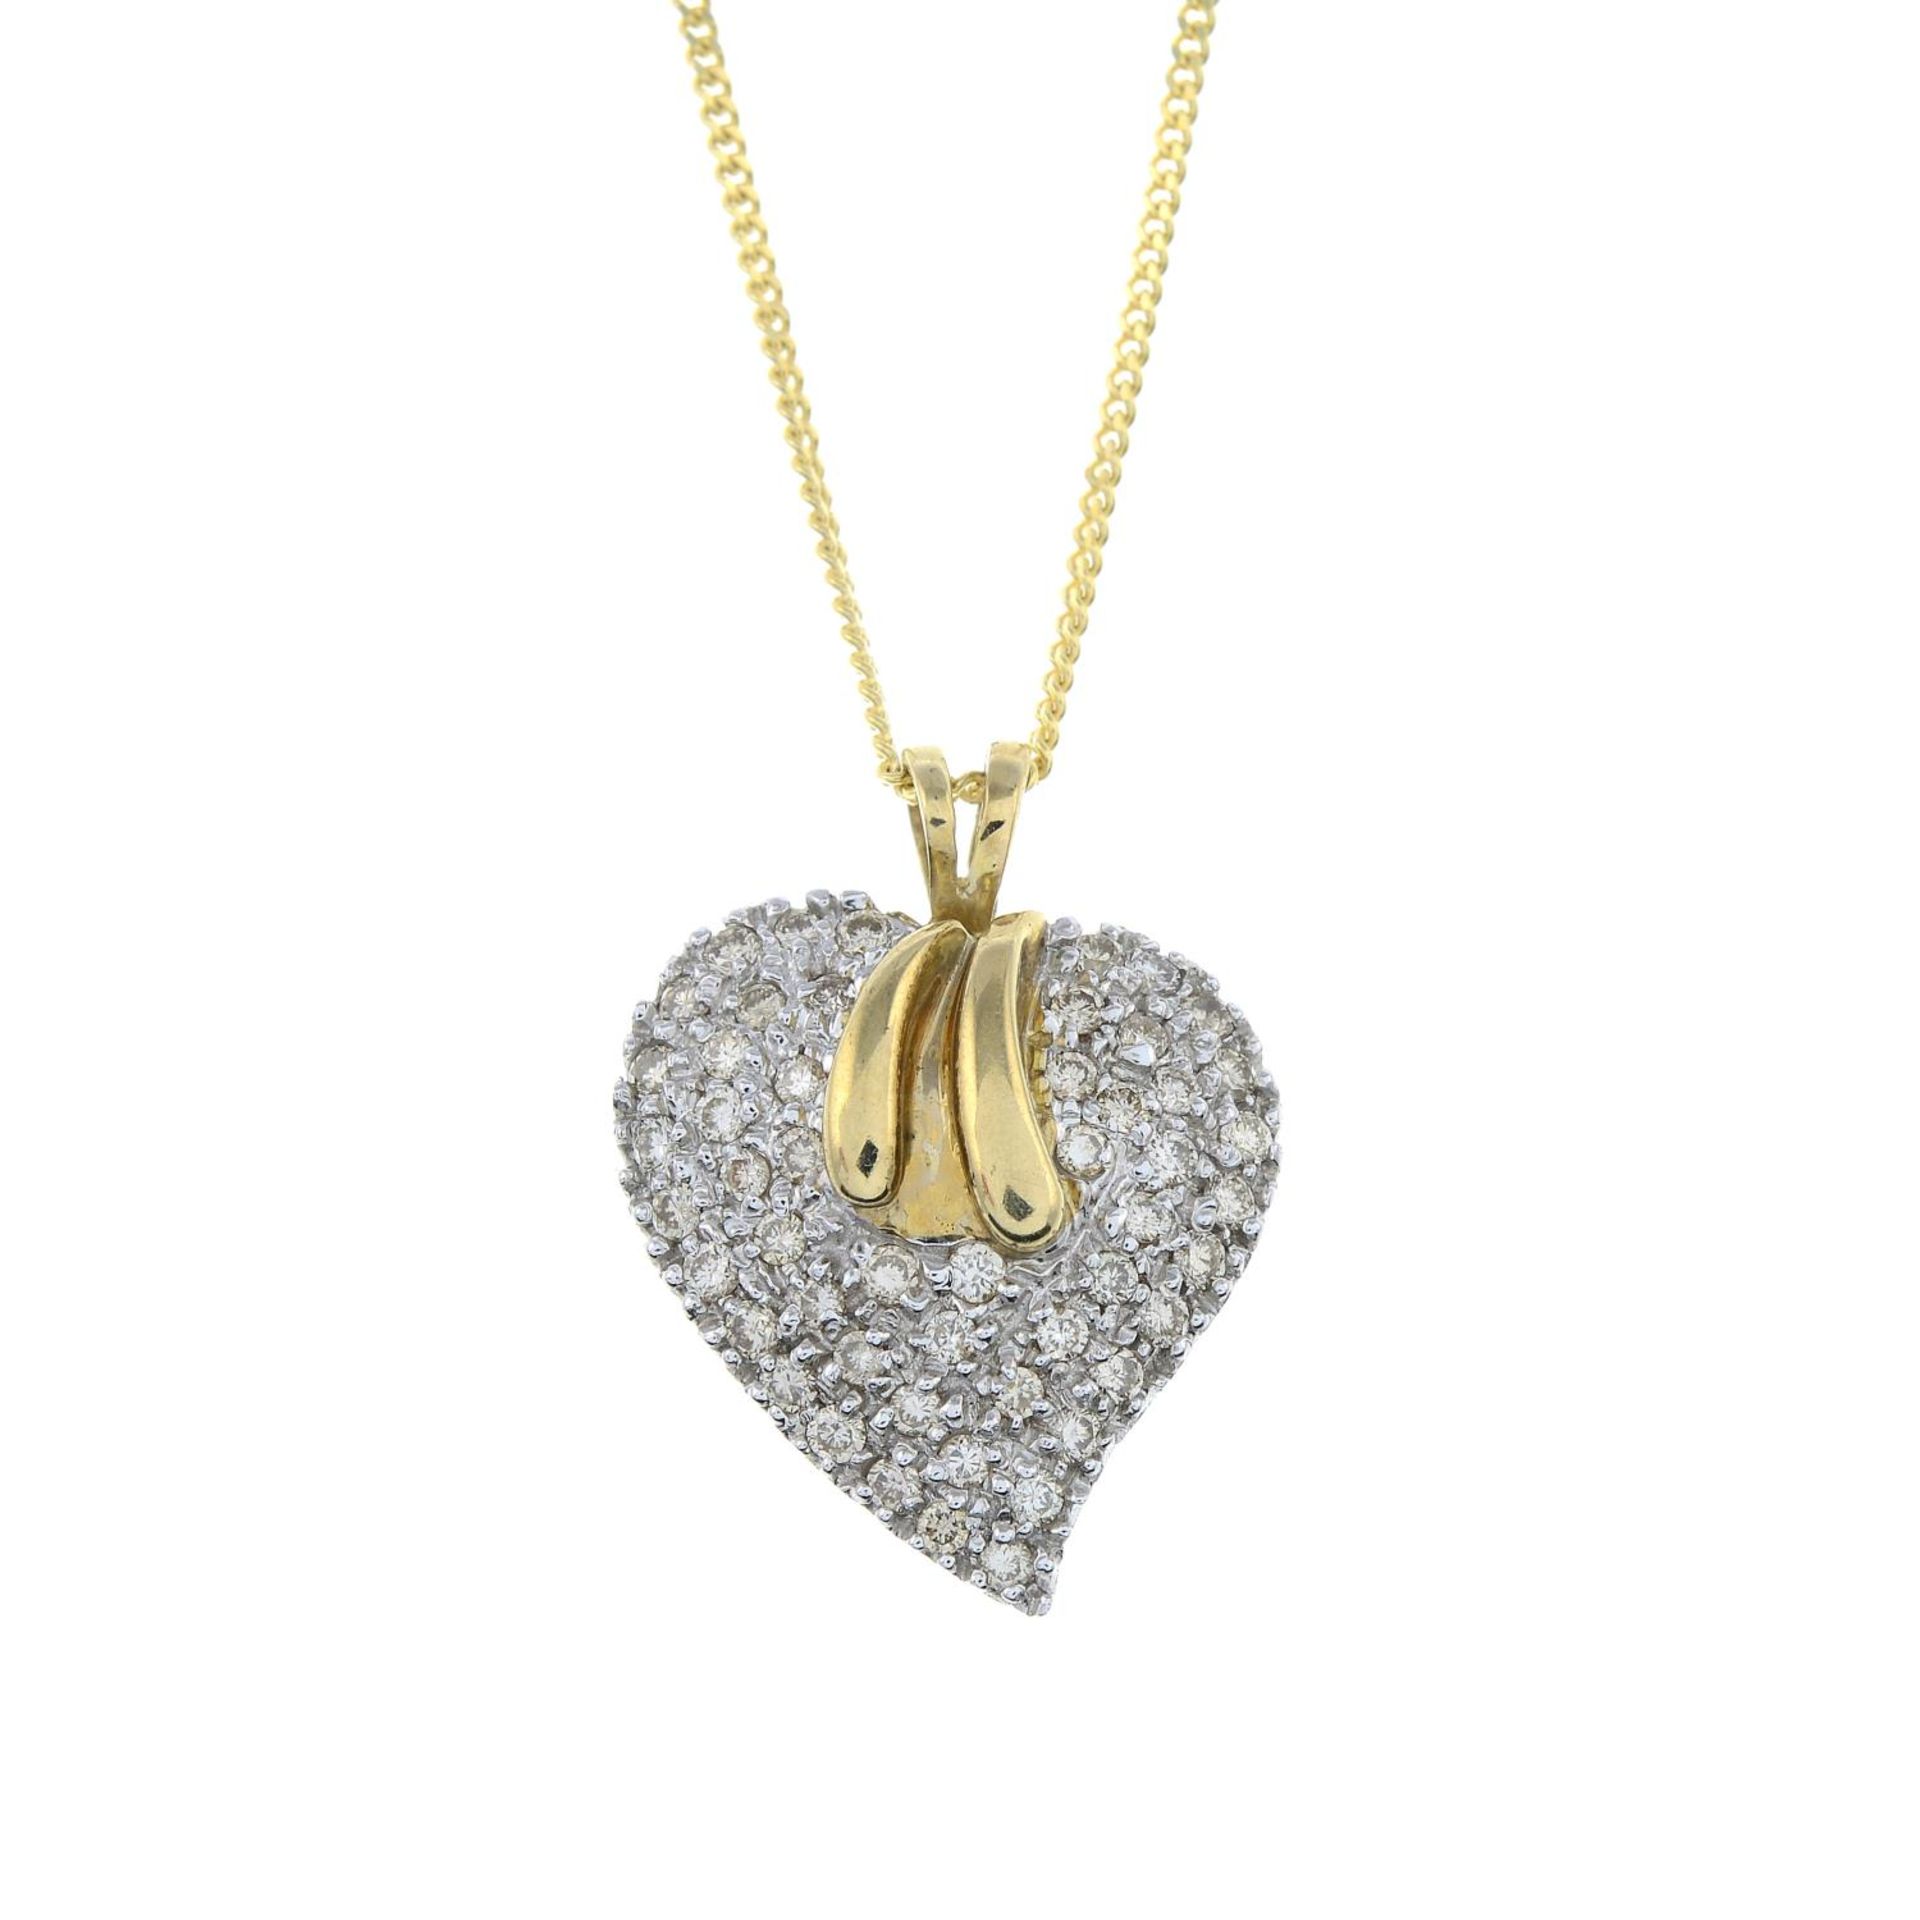 A 9ct gold brilliant-cut diamond heart pendant, with 9ct gold chain.